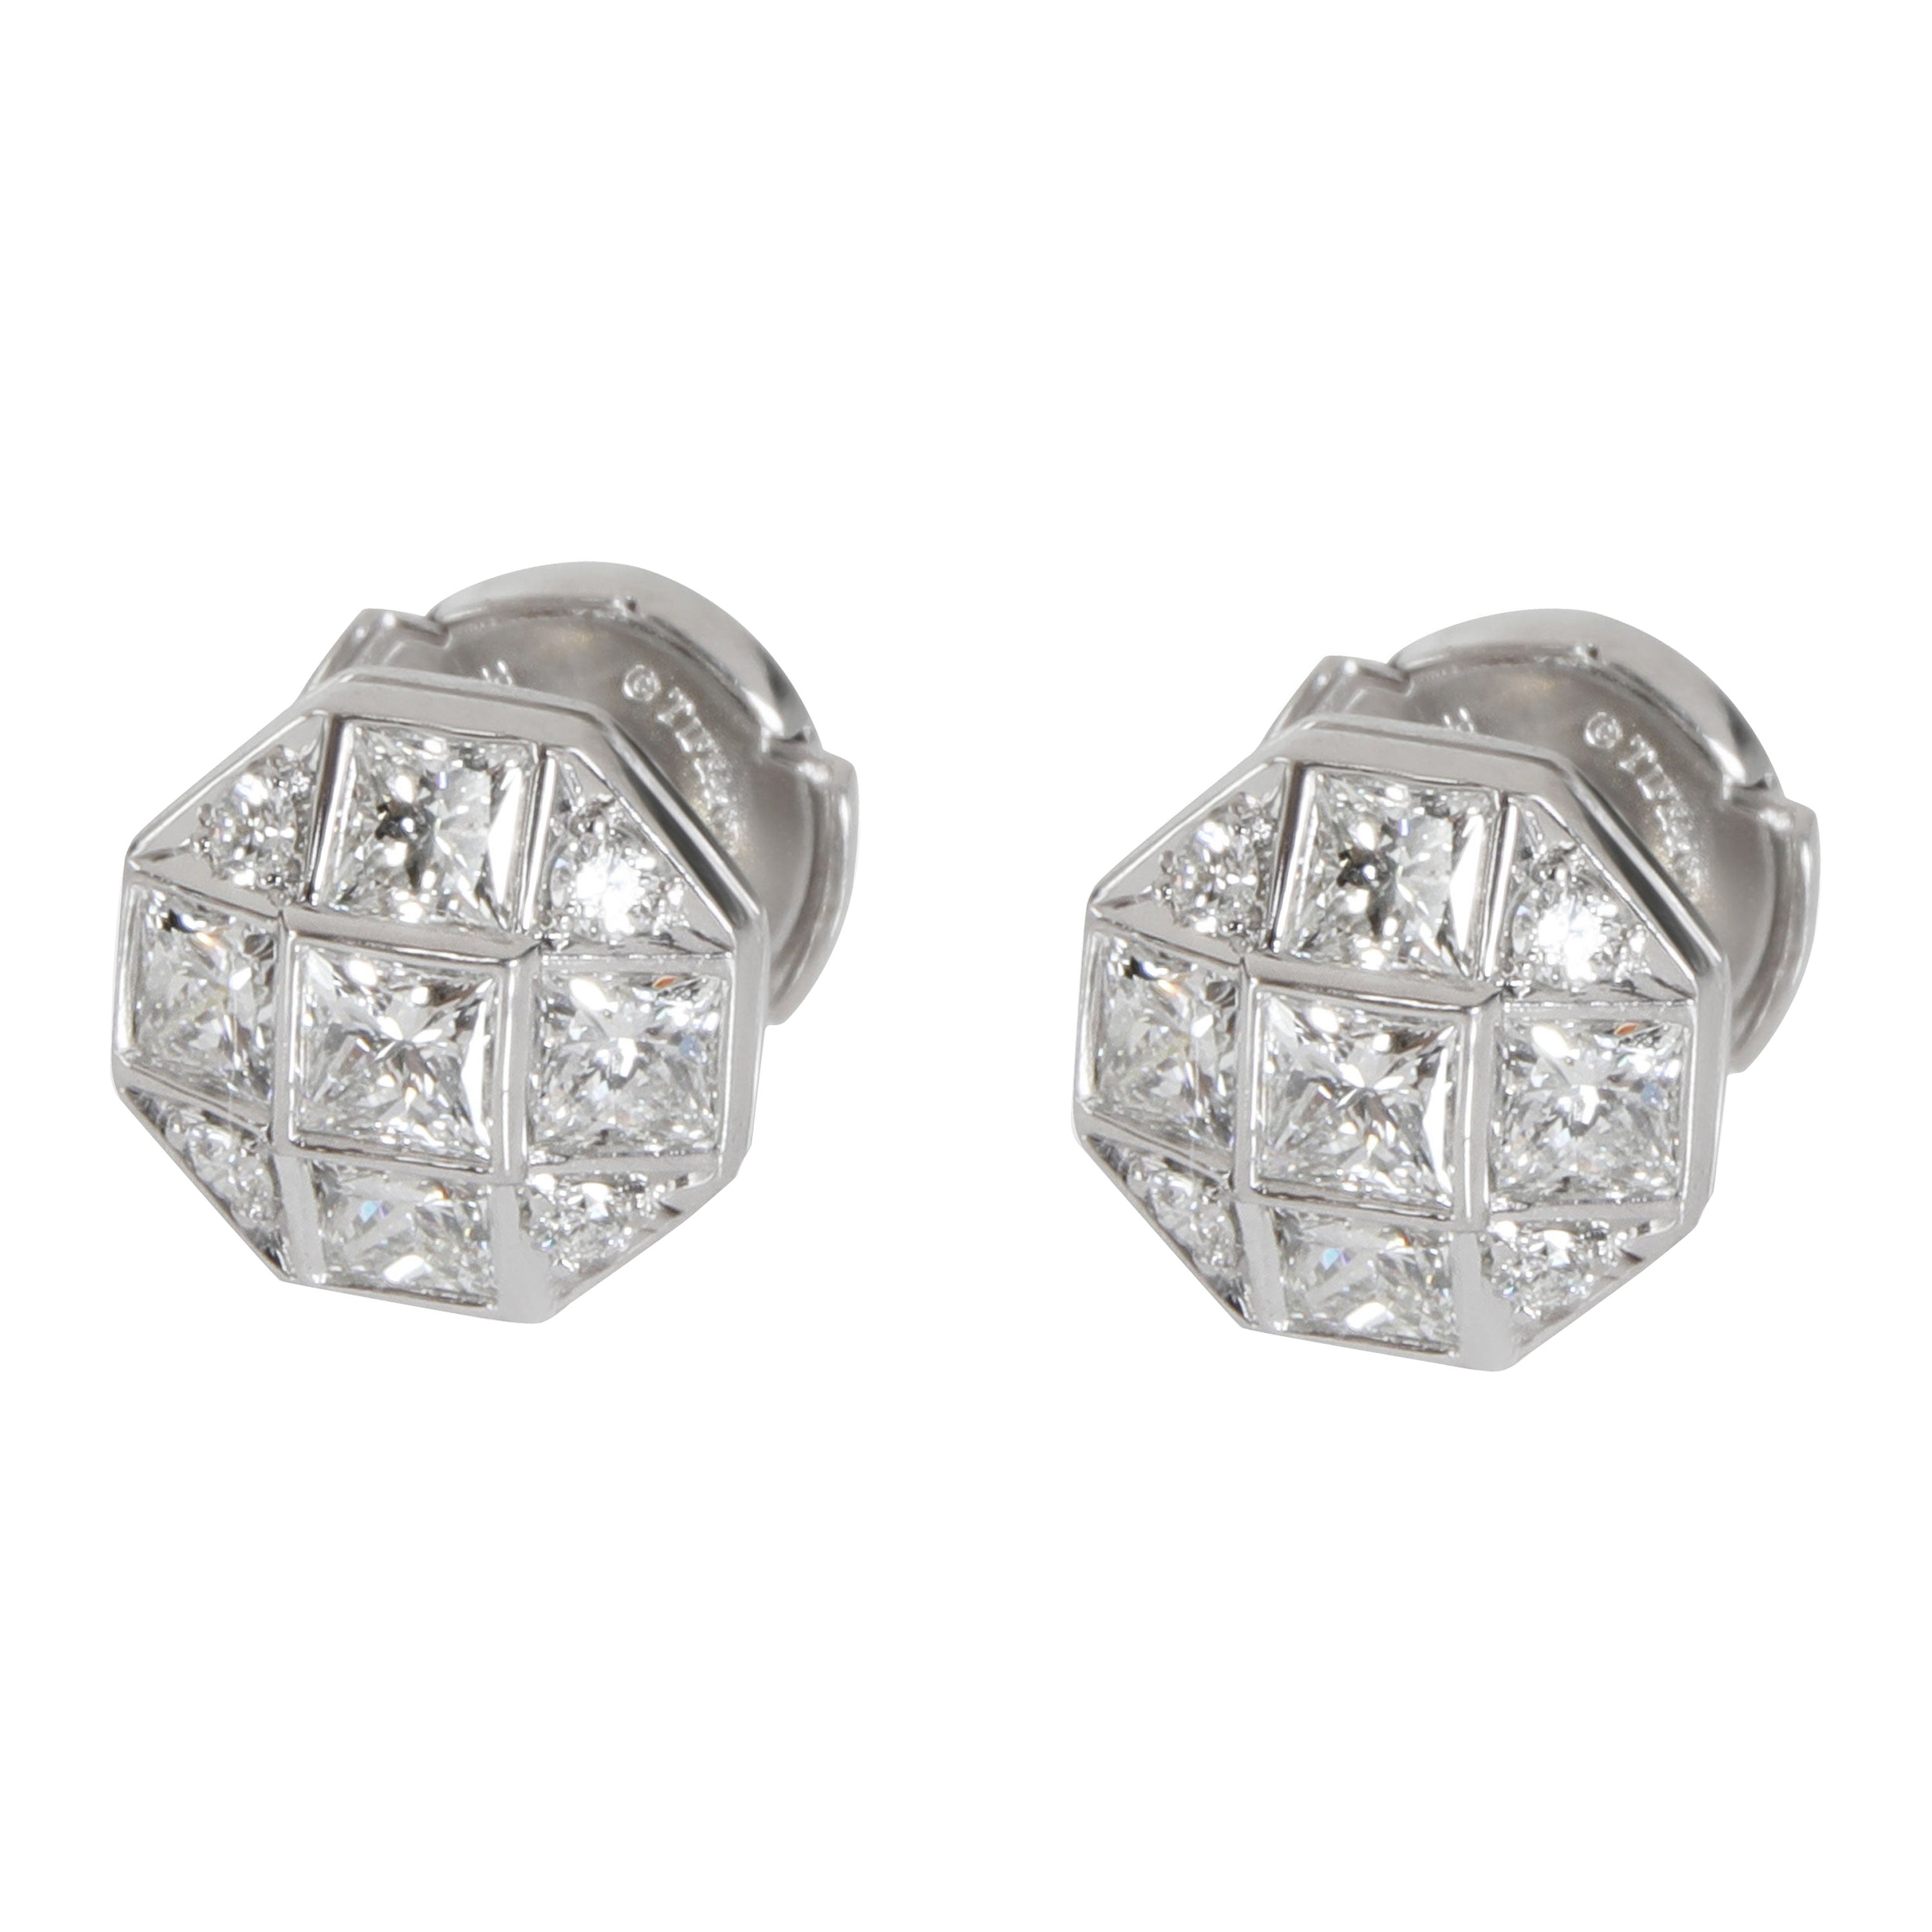 Tiffany Solitaire Diamond Earrings